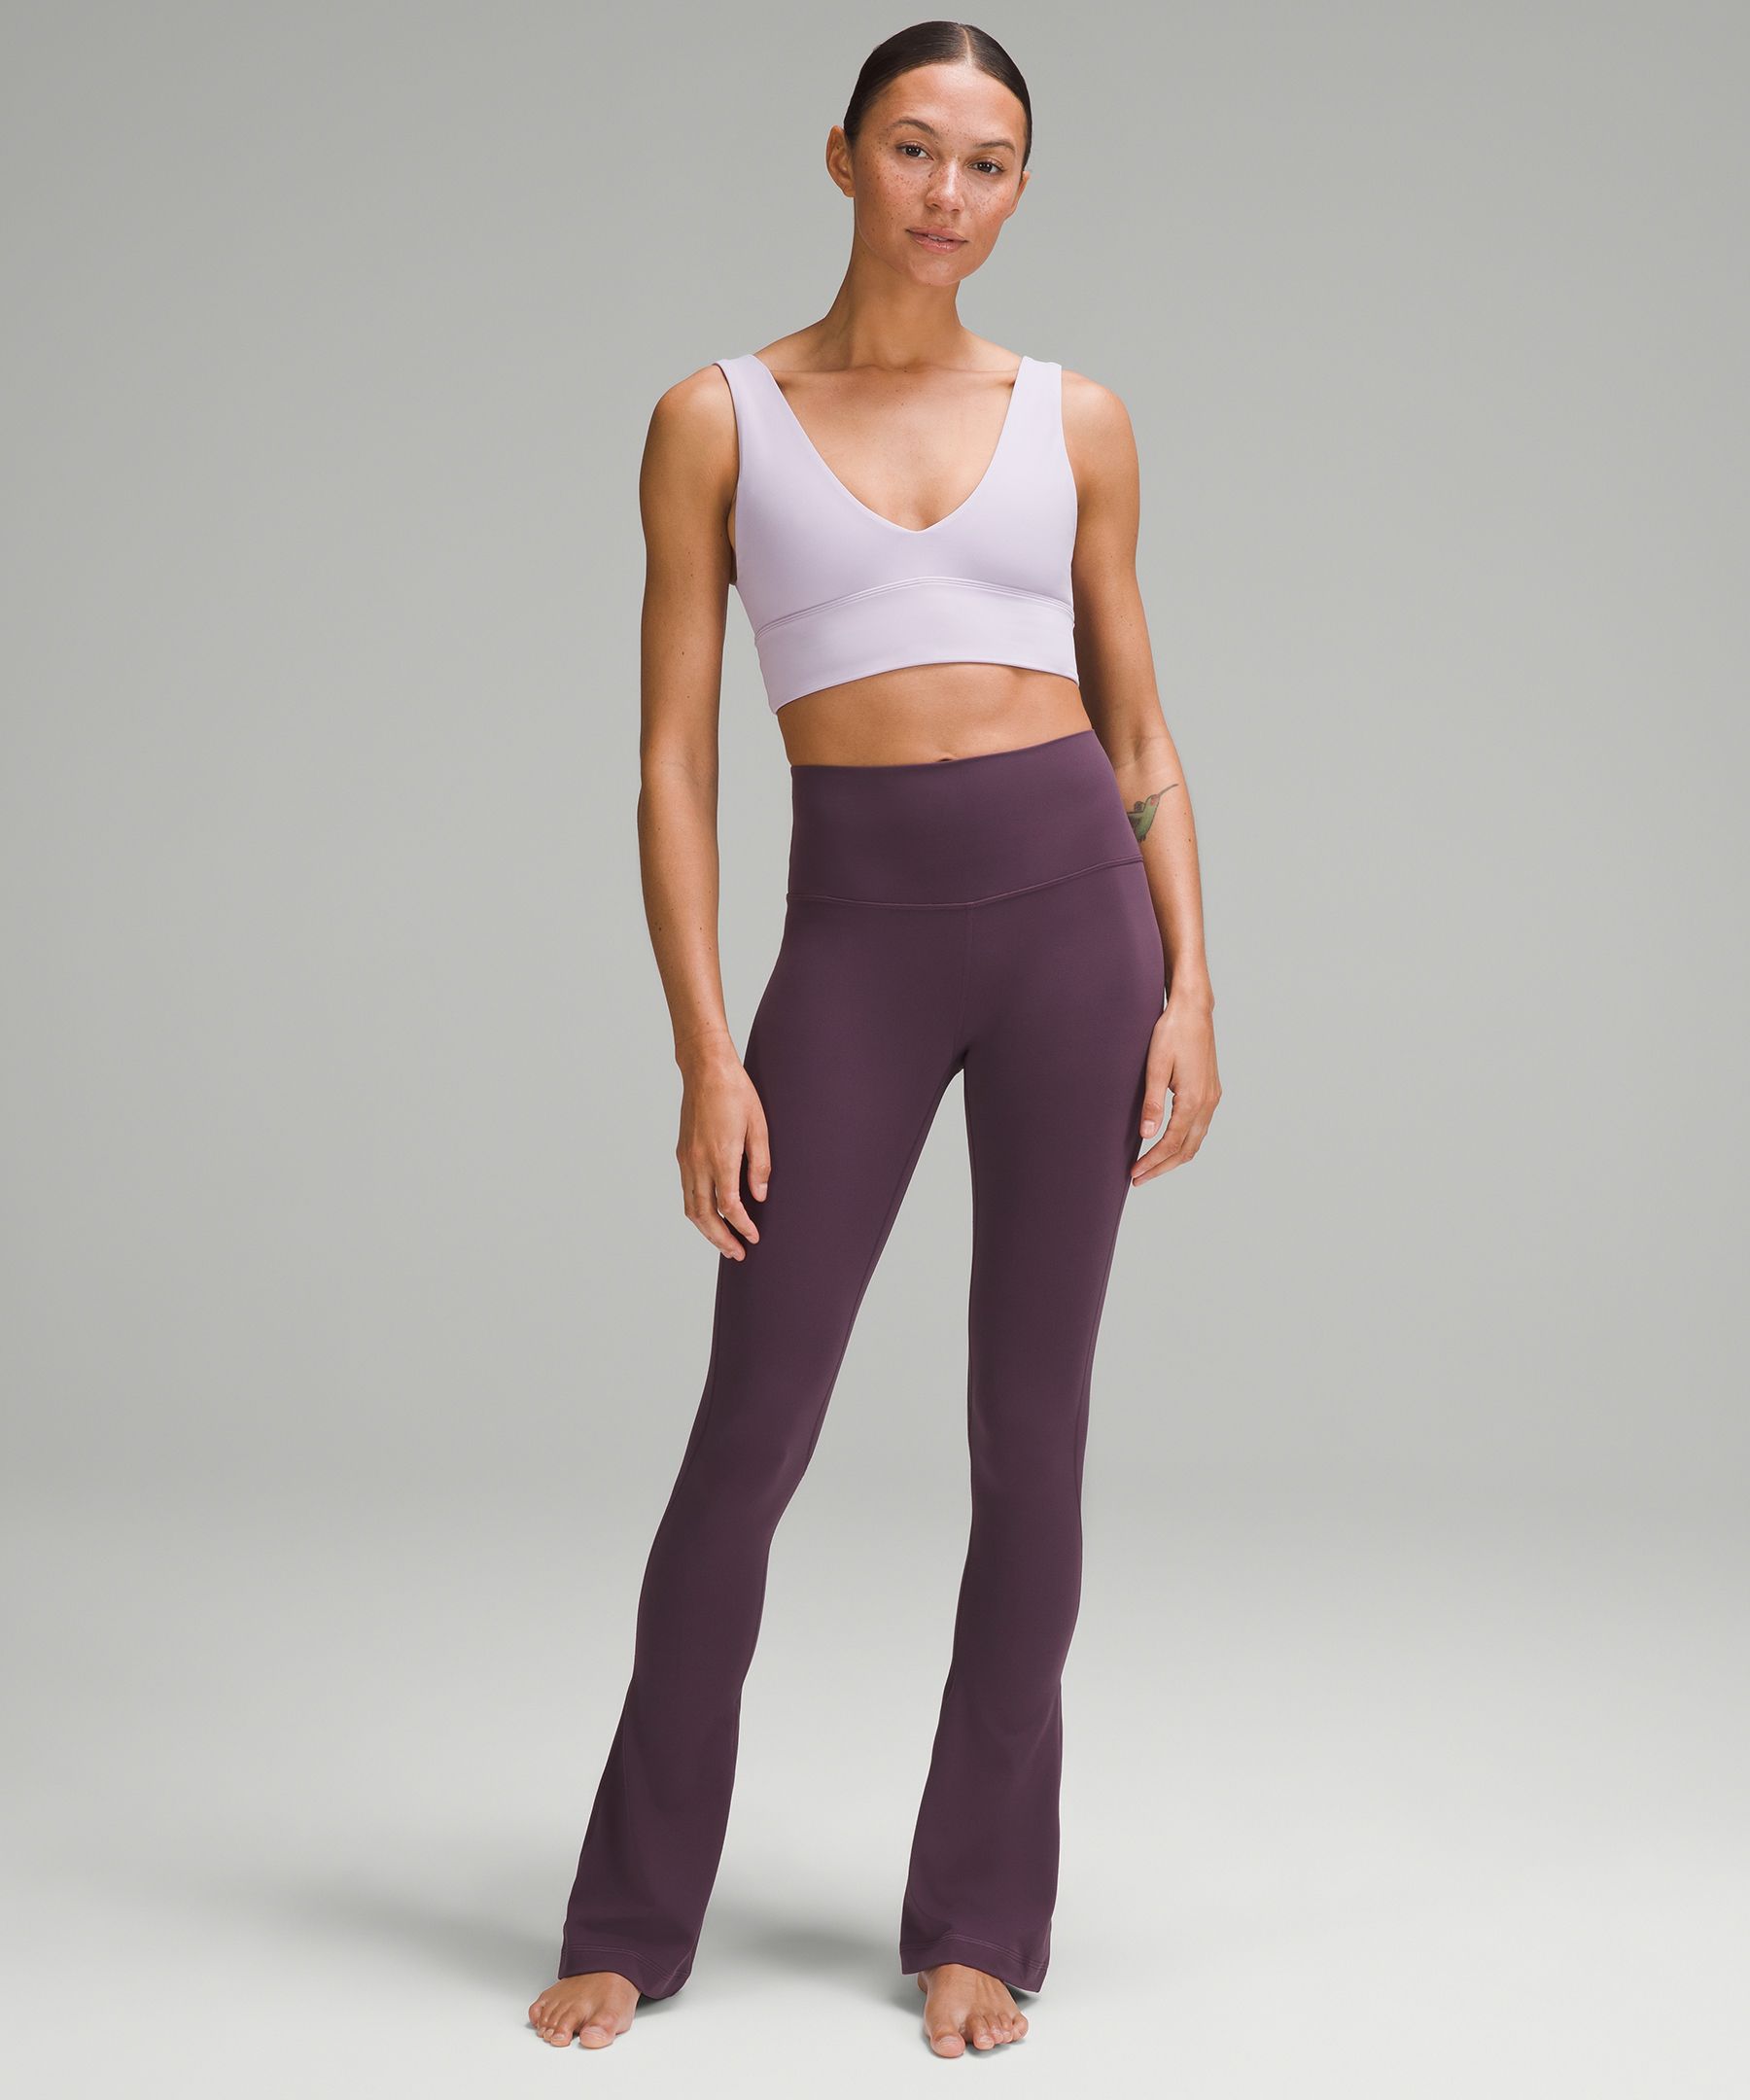 Lululemon Flare Leggings Size 2 - $70 (52% Off Retail) - From Christina